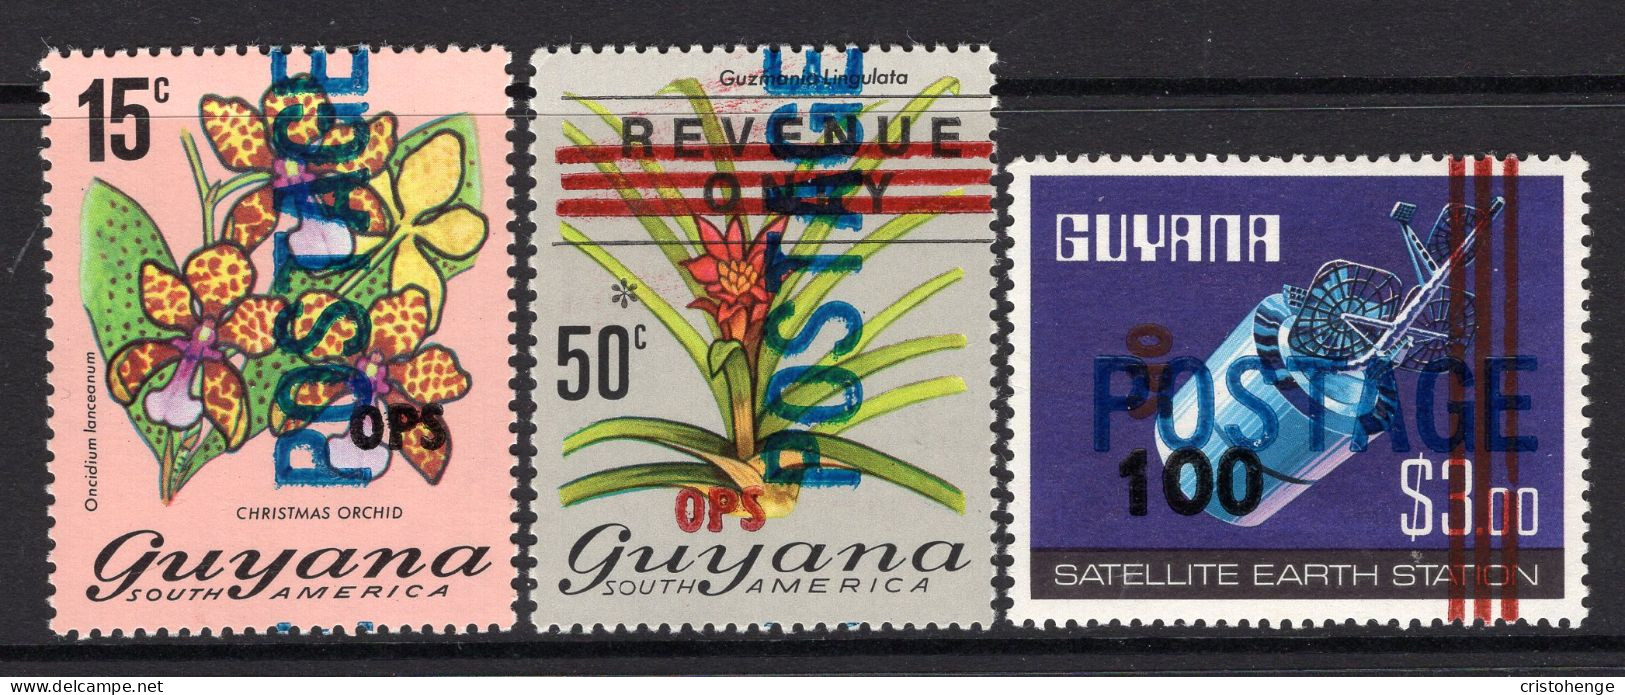 Guyana 1982 Official Stamps Overprinted POSTAGE Set HM (SG 1009-1011) - Guyana (1966-...)